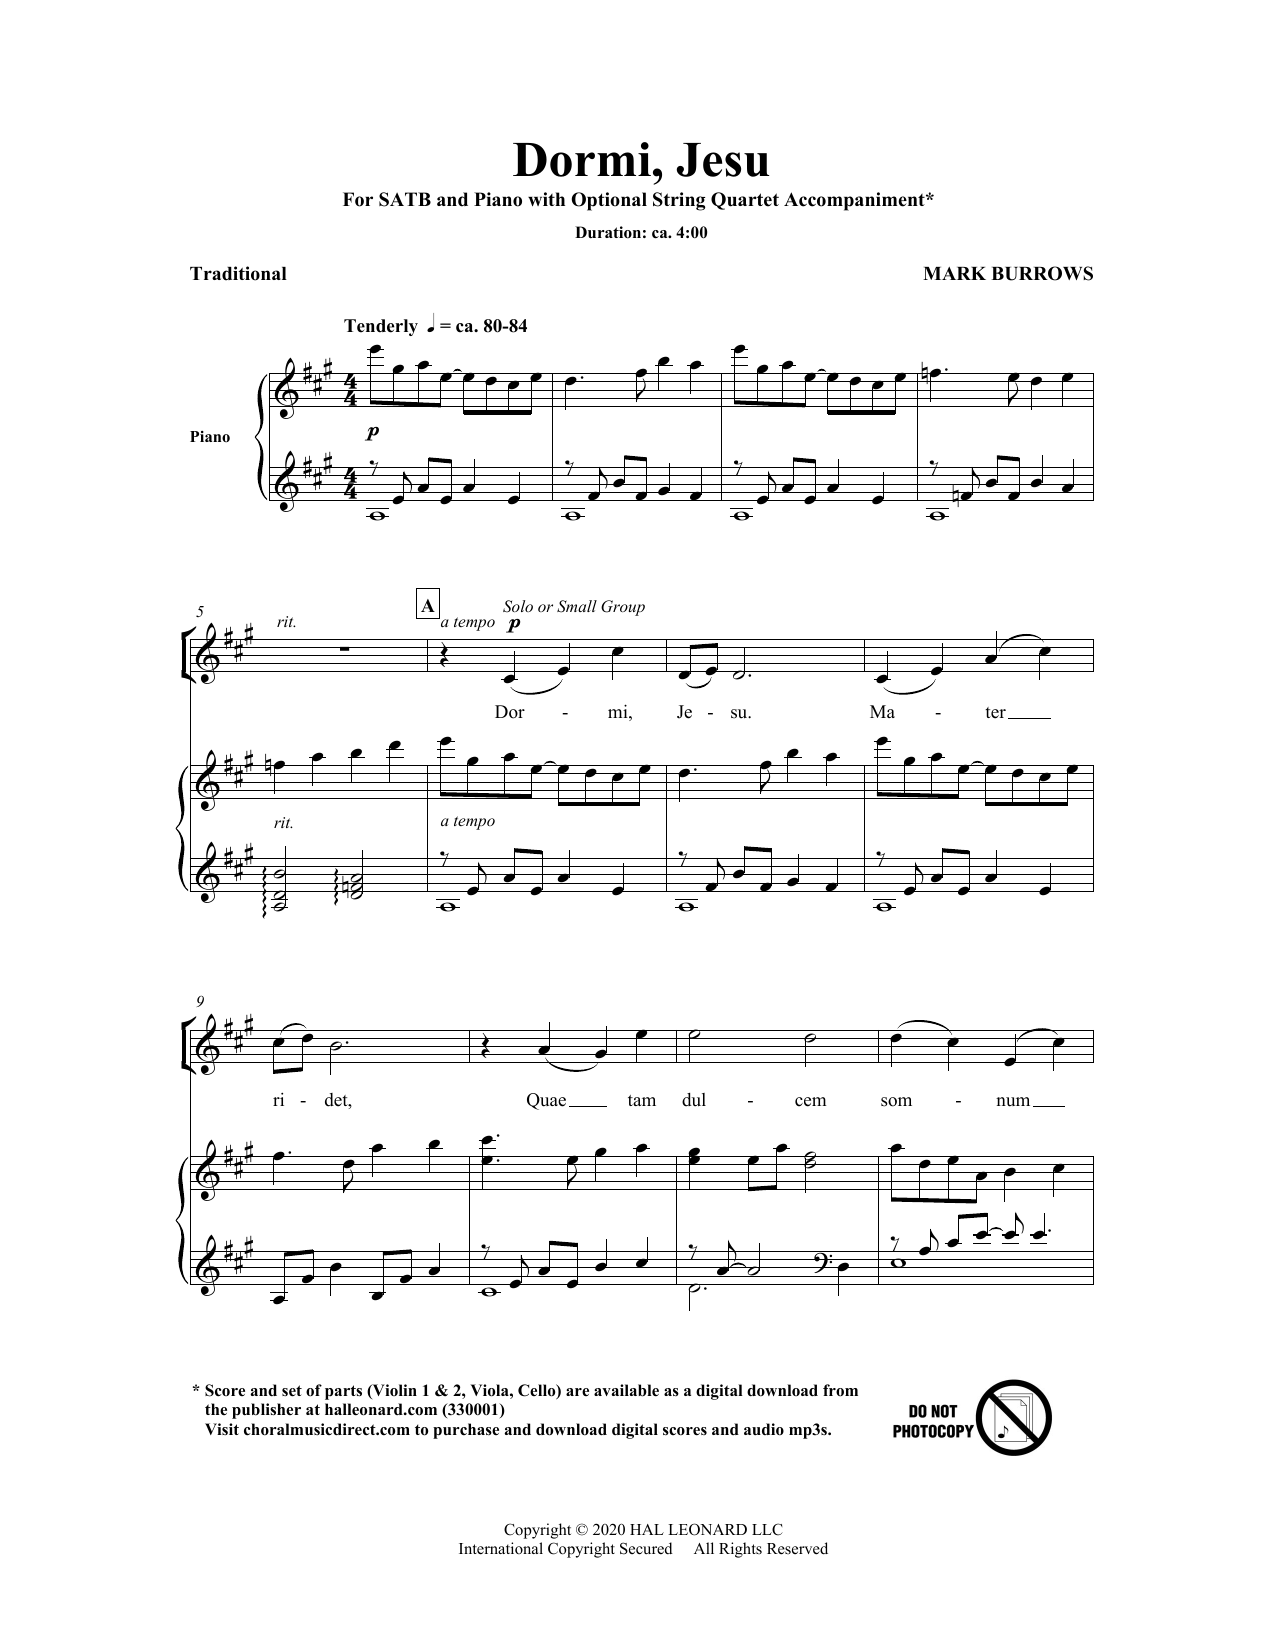 Mark Burrows Dormi, Jesu Sheet Music Notes & Chords for SATB Choir - Download or Print PDF